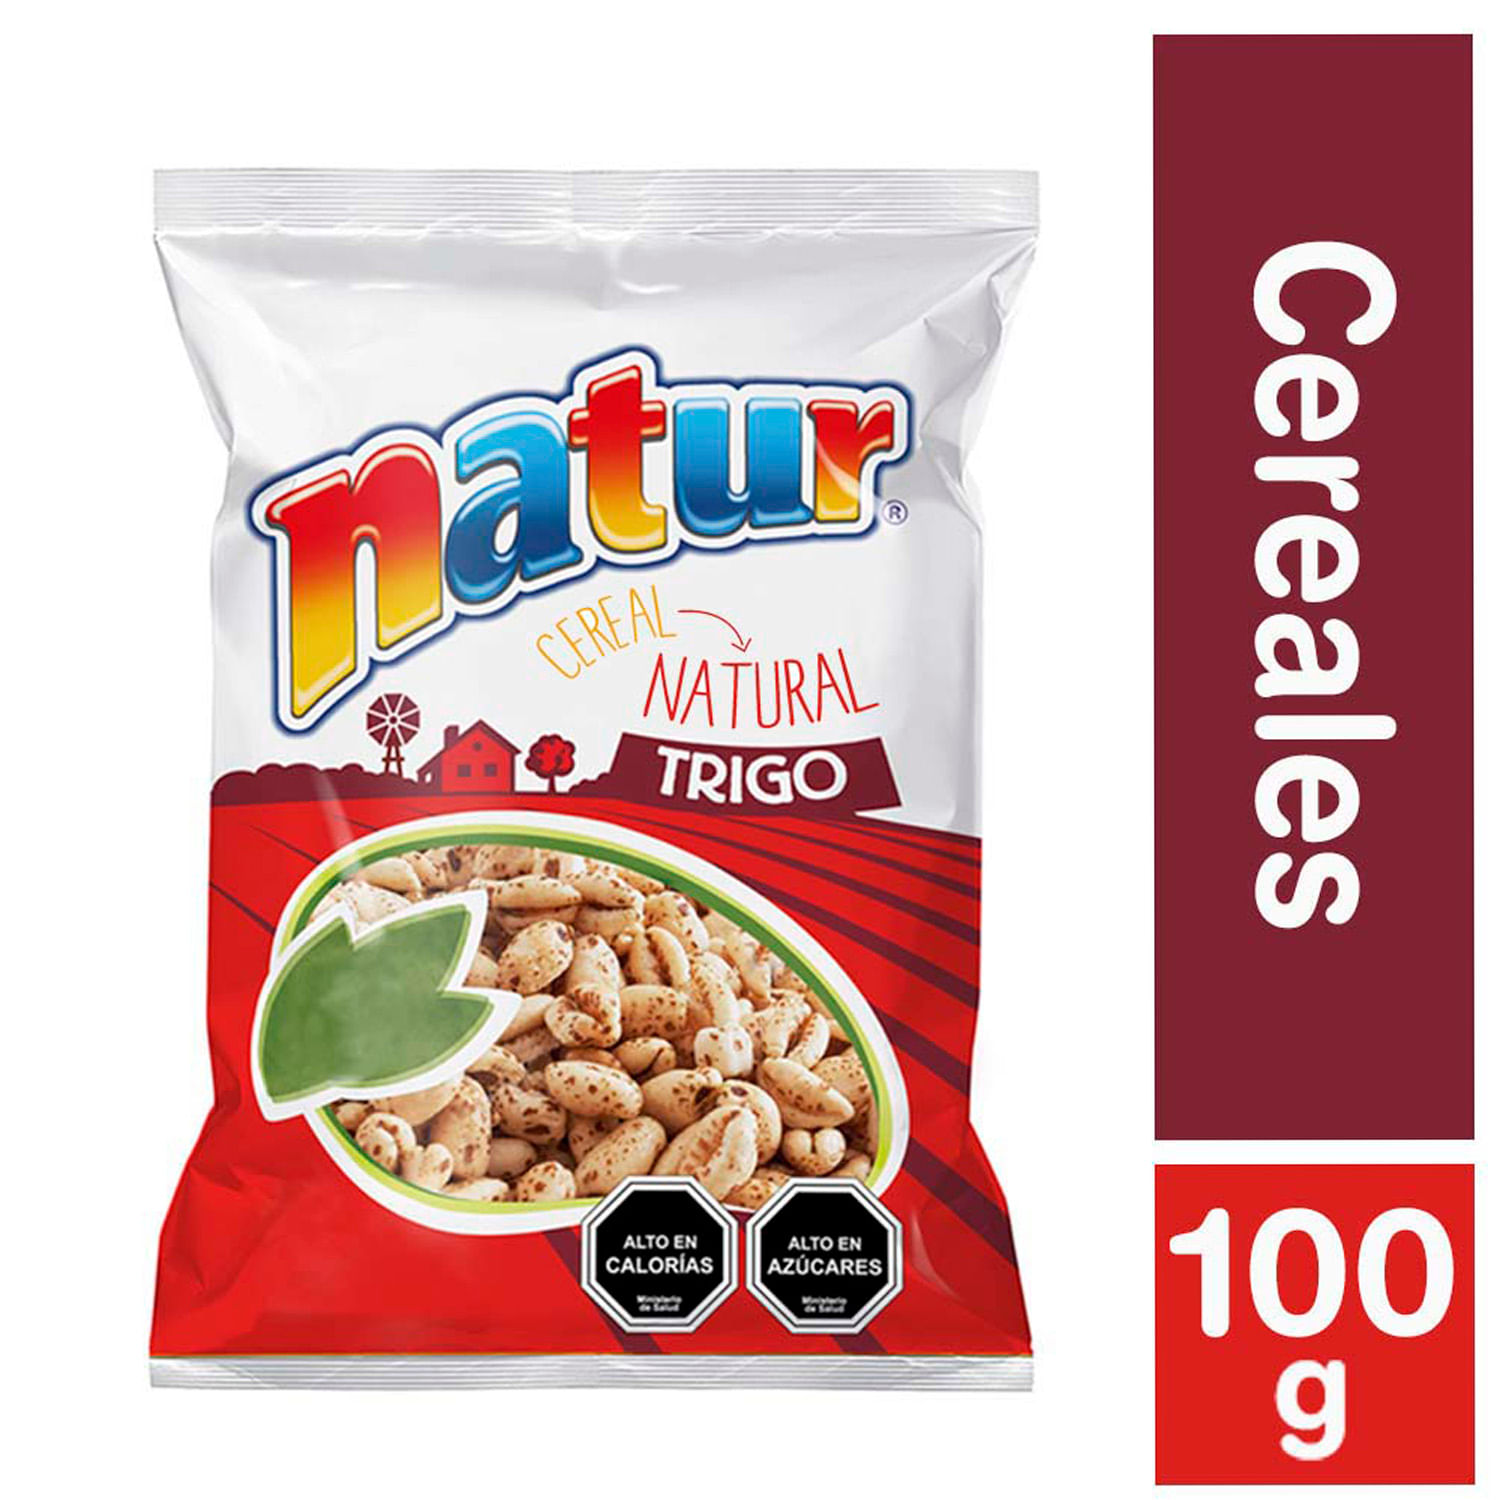 Comprar Cereal Helios Germen De Trigo 454 Gr